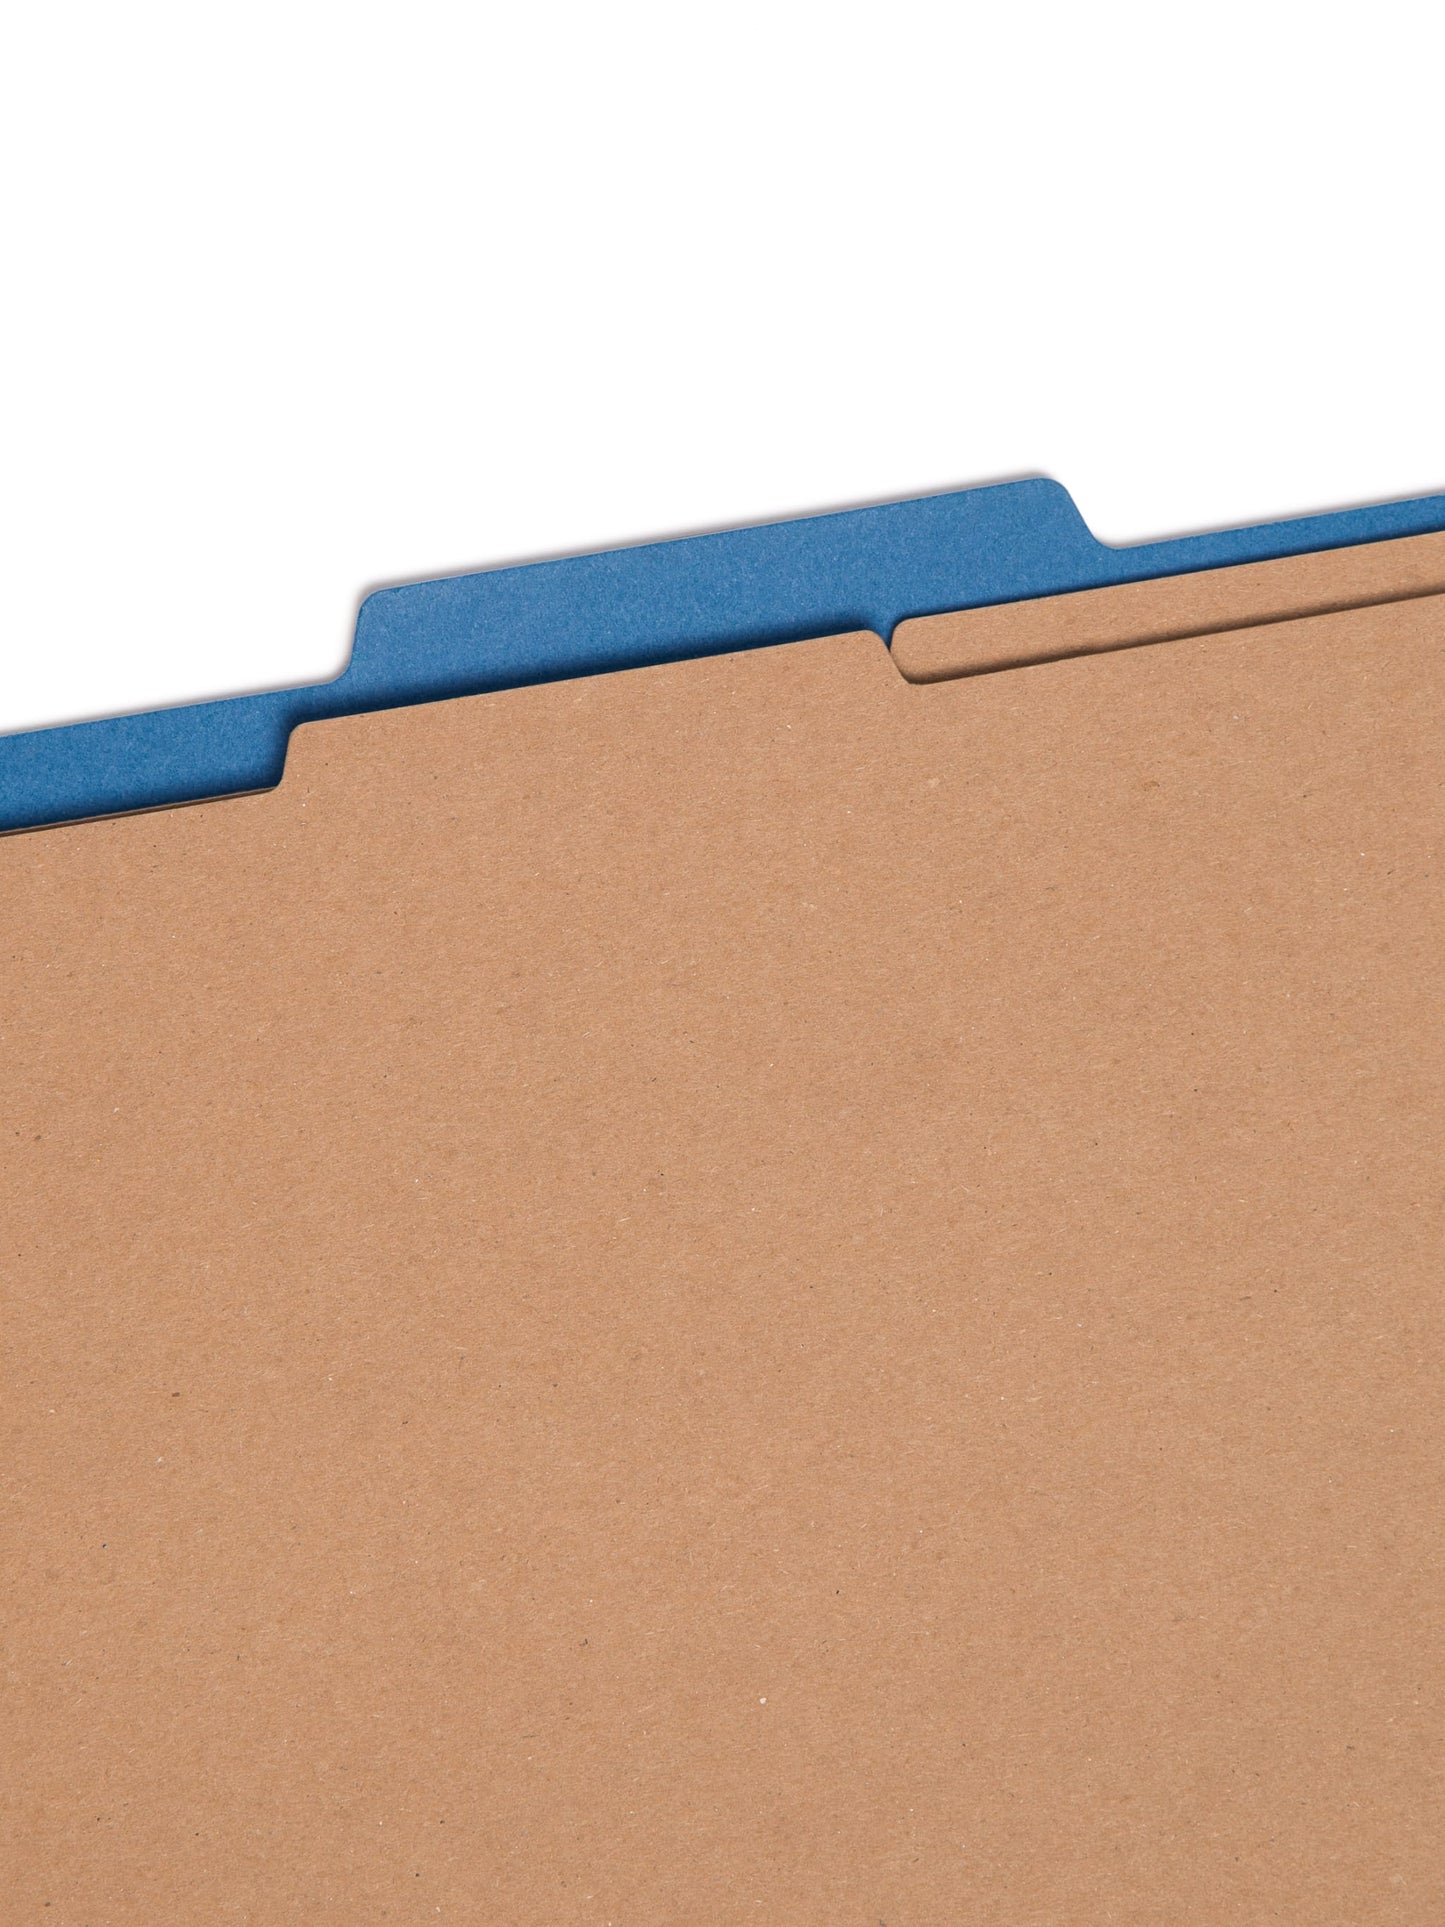 SafeSHIELD® Pressboard Classification File Folders, 2 Dividers, 2 inch Expansion, 2/5-Cut Tab, Dark Blue Color, Letter Size, Set of 0, 30086486140325